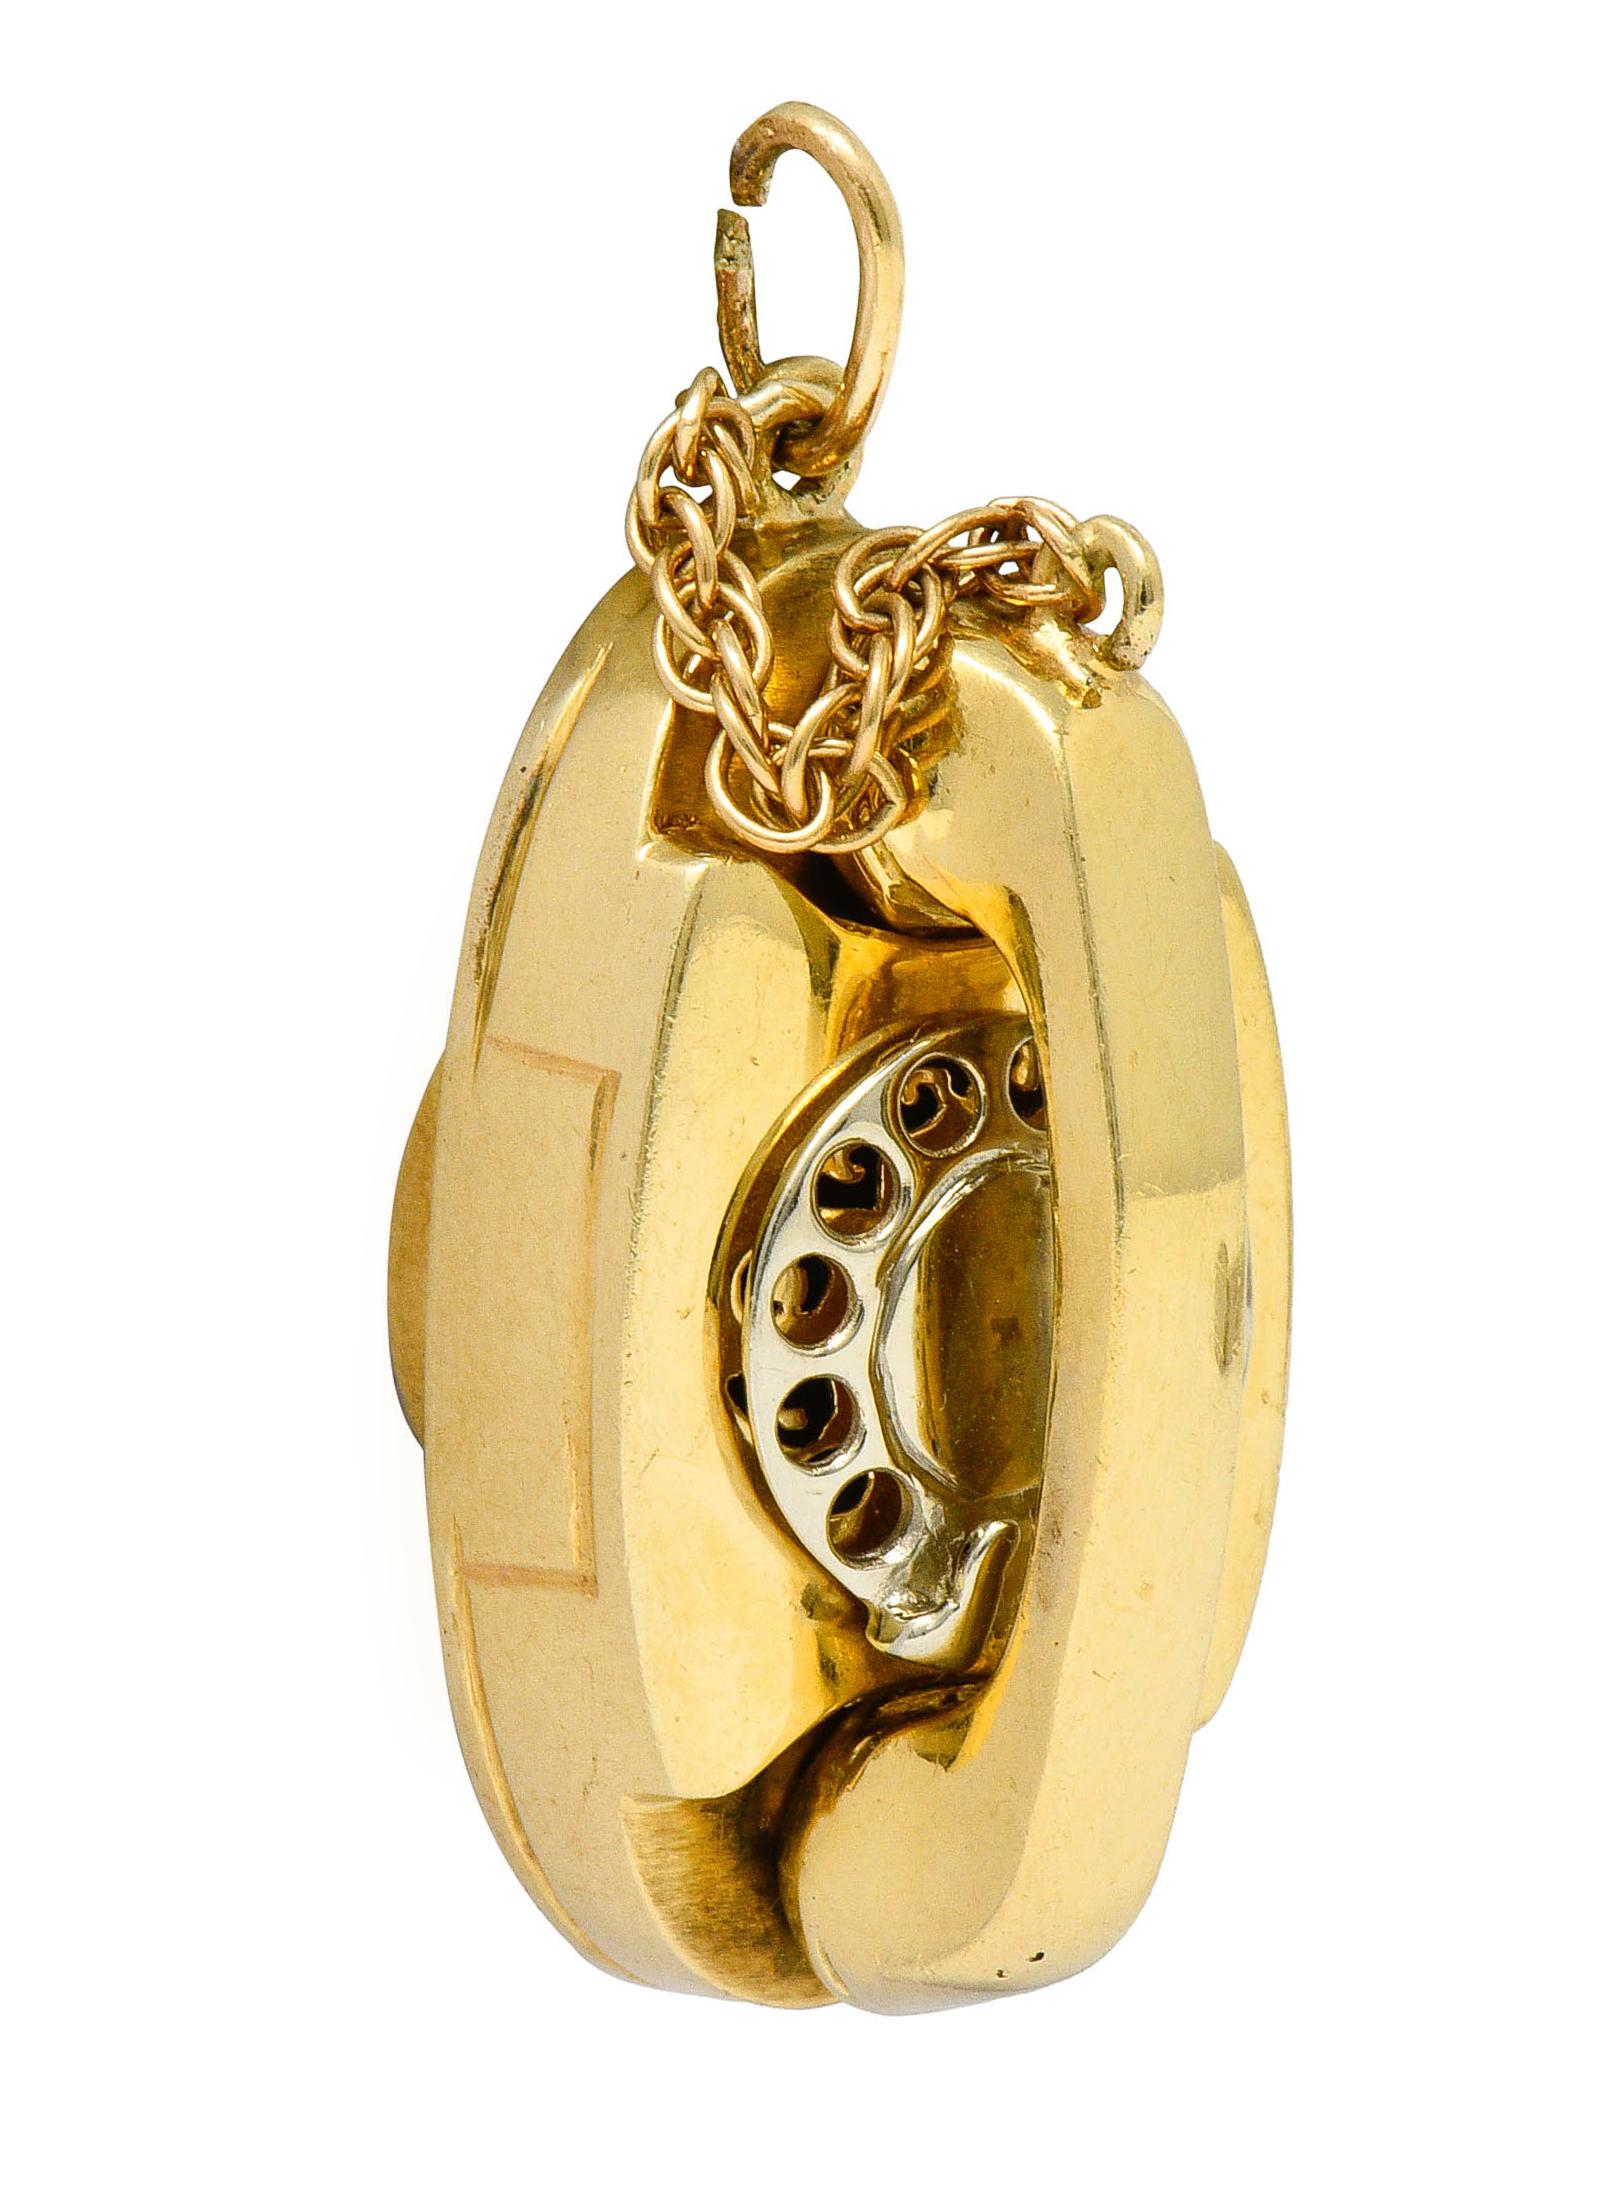 Contemporary 1960s Litacharm Inc. 14 Karat Gold Vintage Telephone Pendant Charm